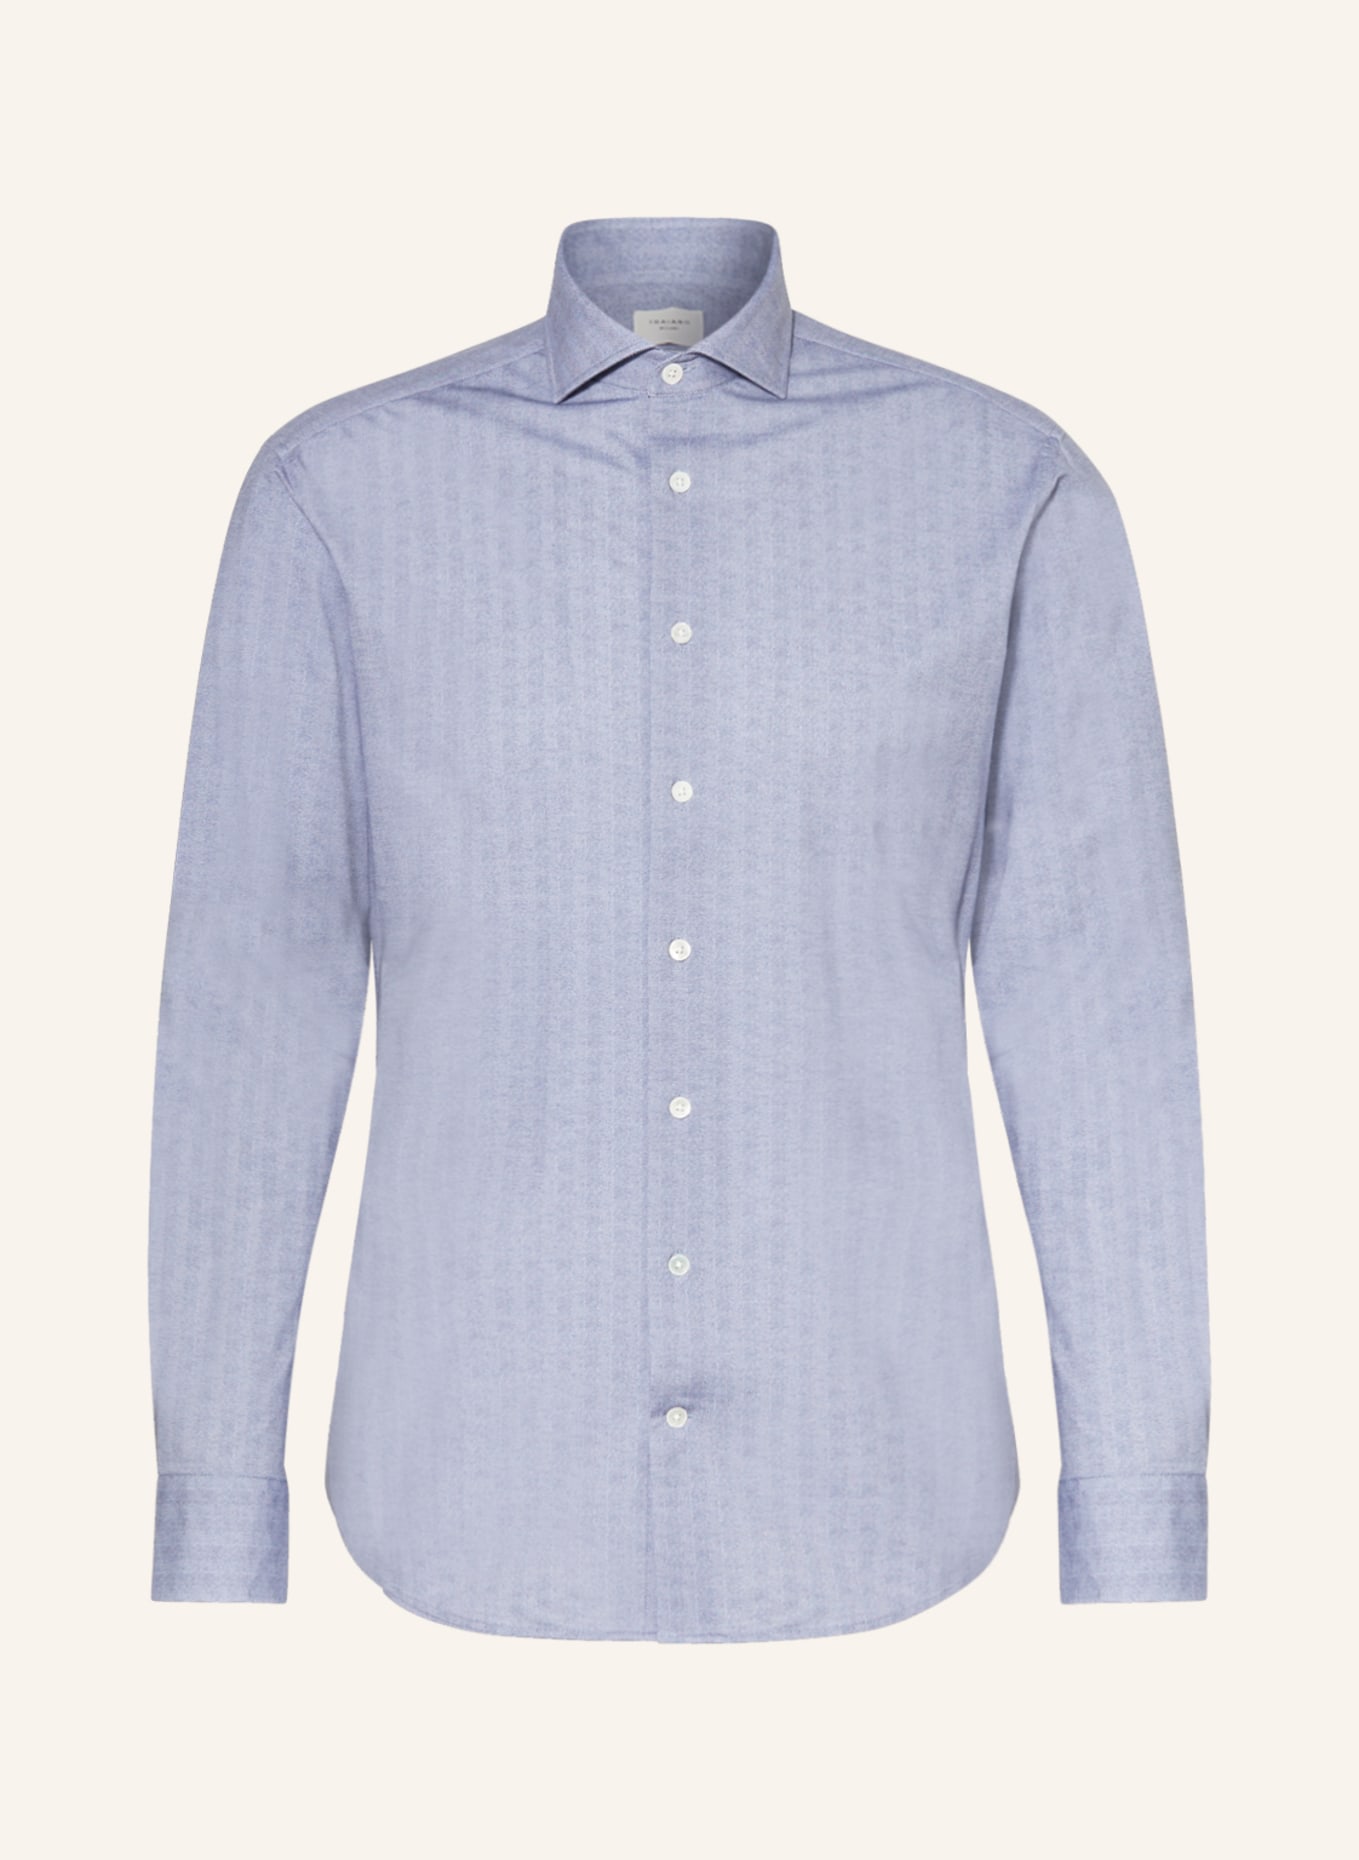 TRAIANO Jerseyhemd ROSSINI Radical Fit, Farbe: BLAUGRAU (Bild 1)